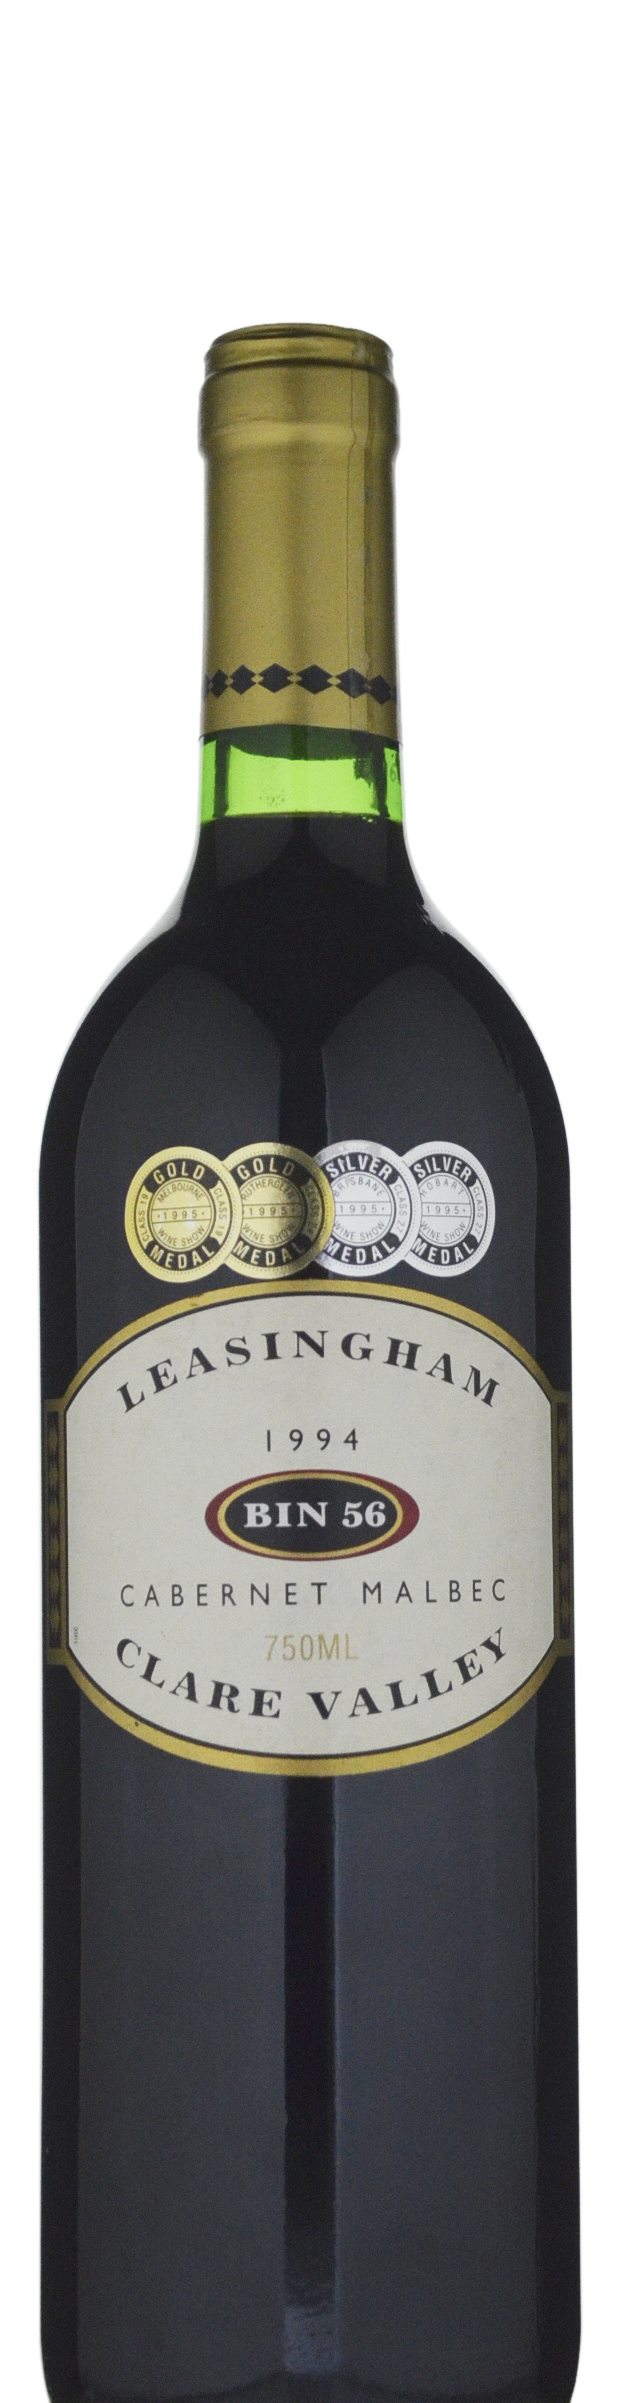 Leasingham Bin 56 Cabernet Malbec 1994